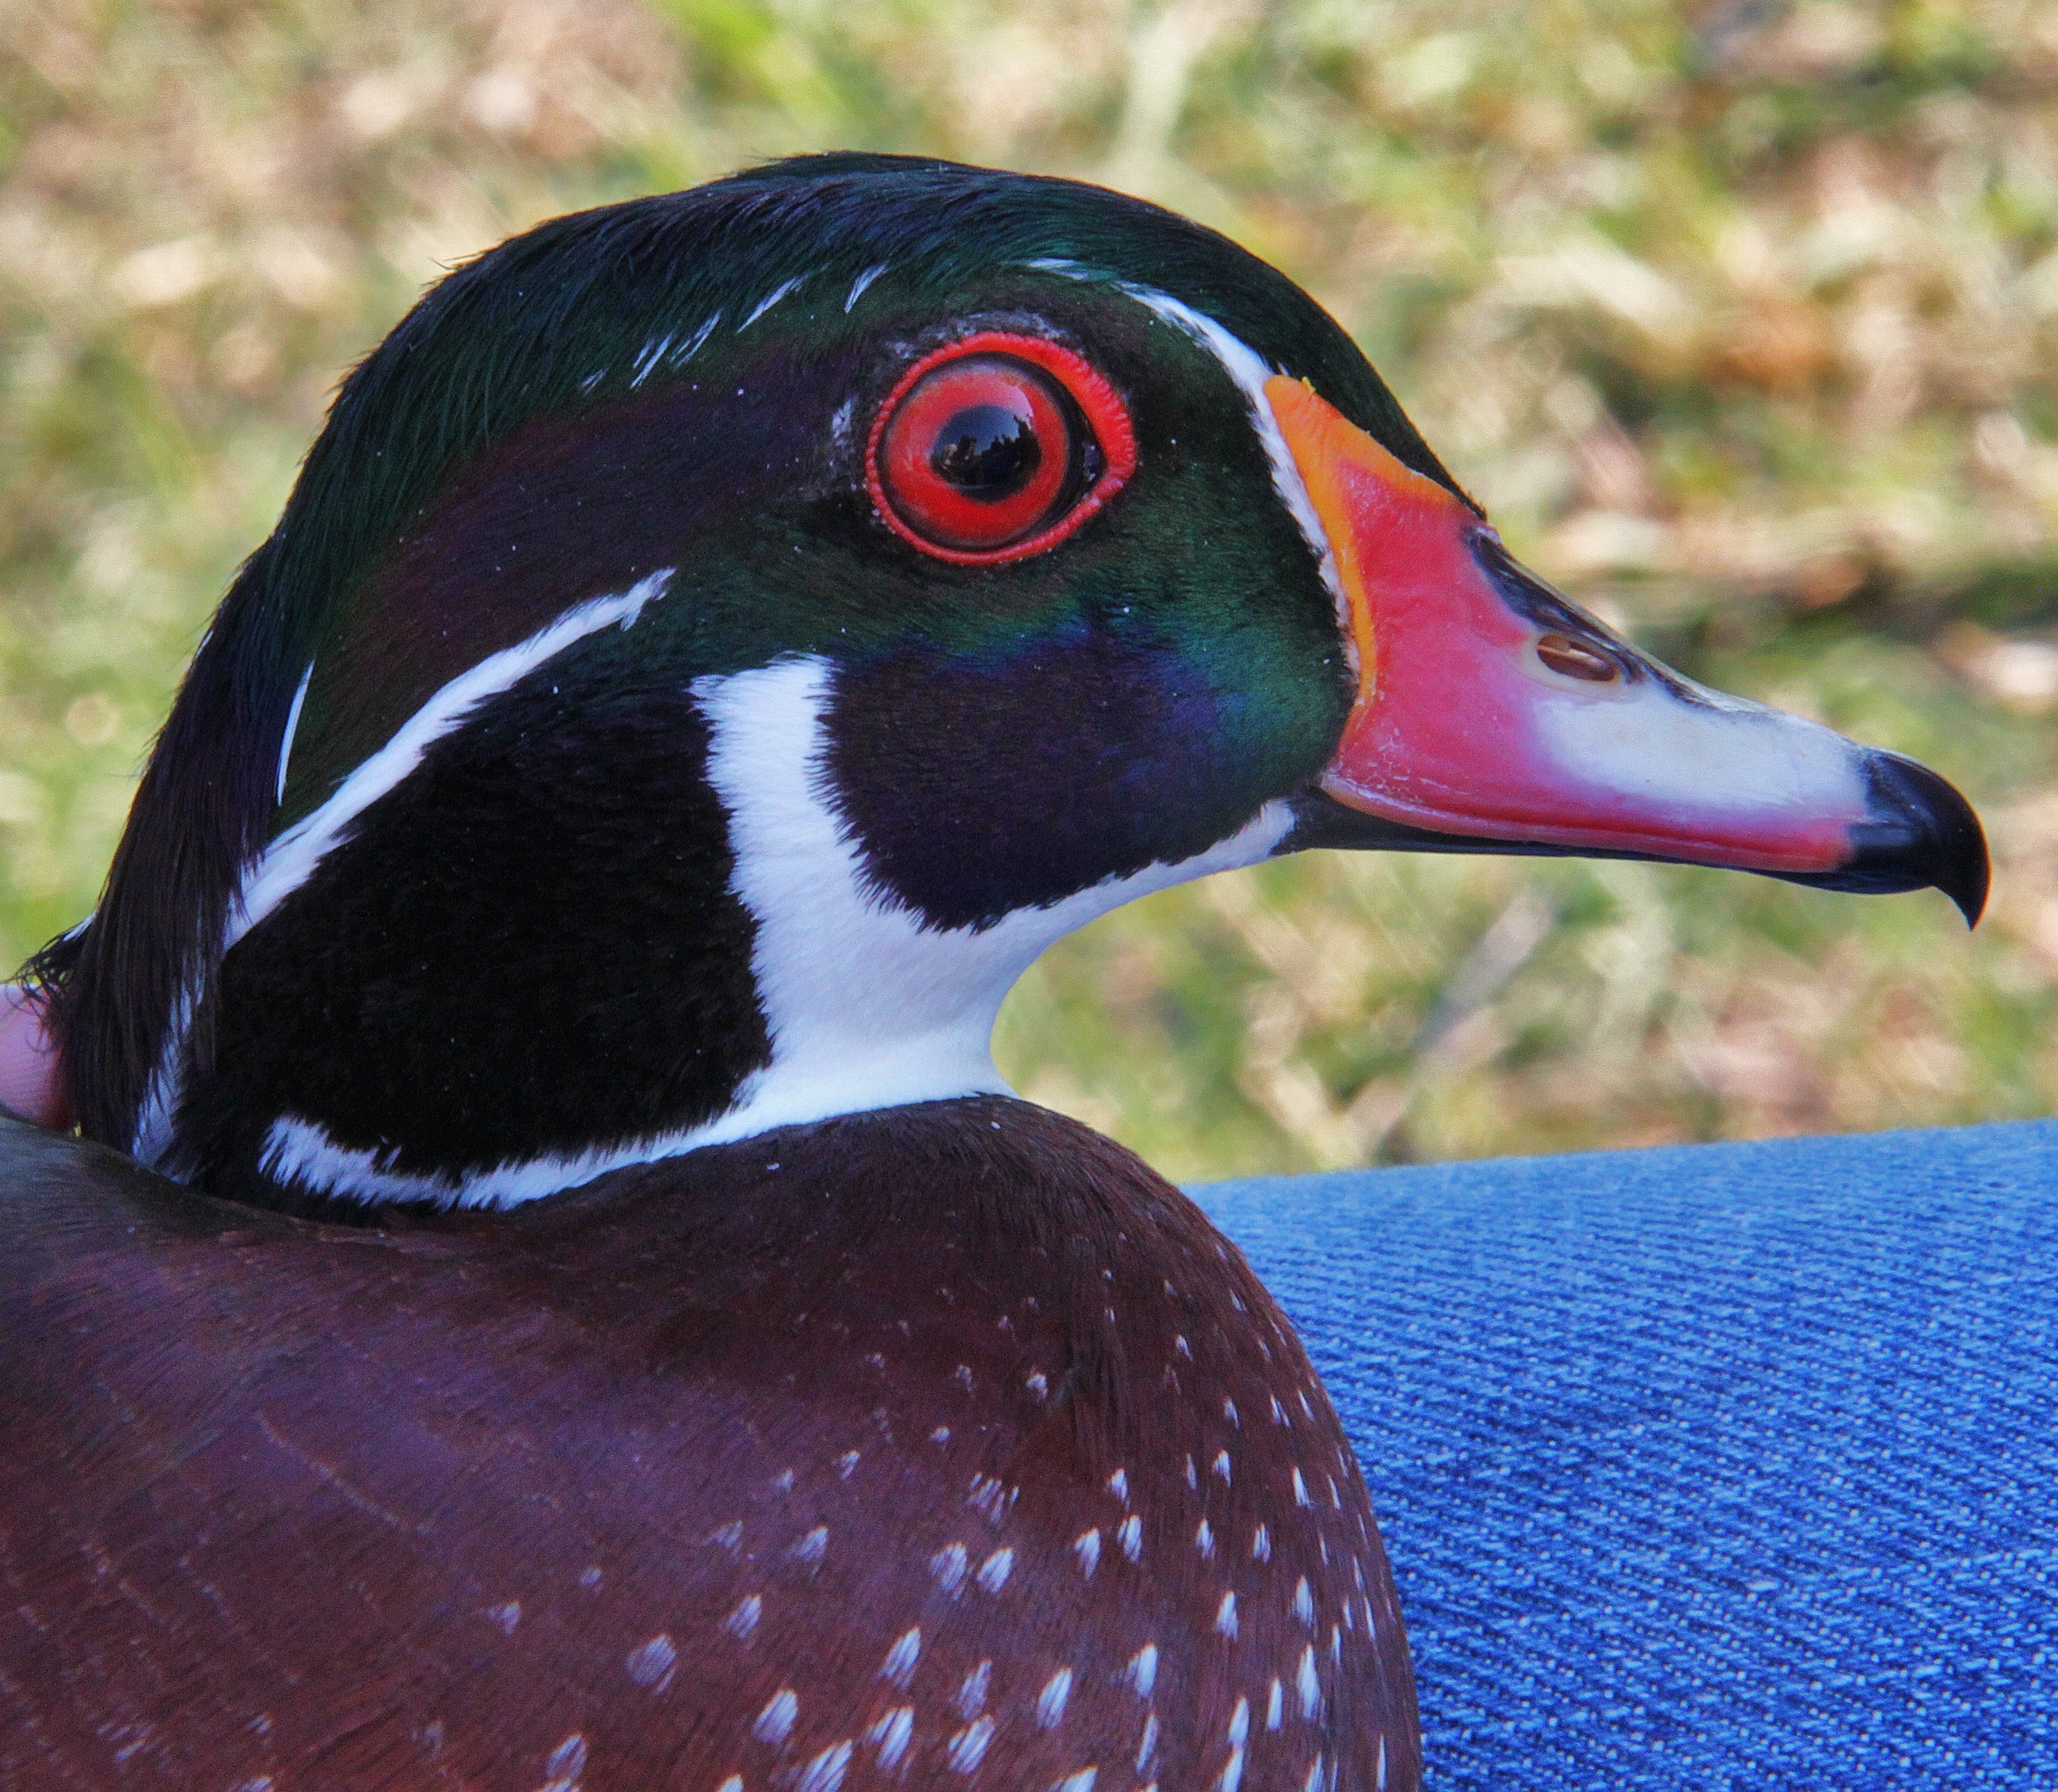 Male wood duck at Missisquoi National Wildlife Refuge (8026620023)